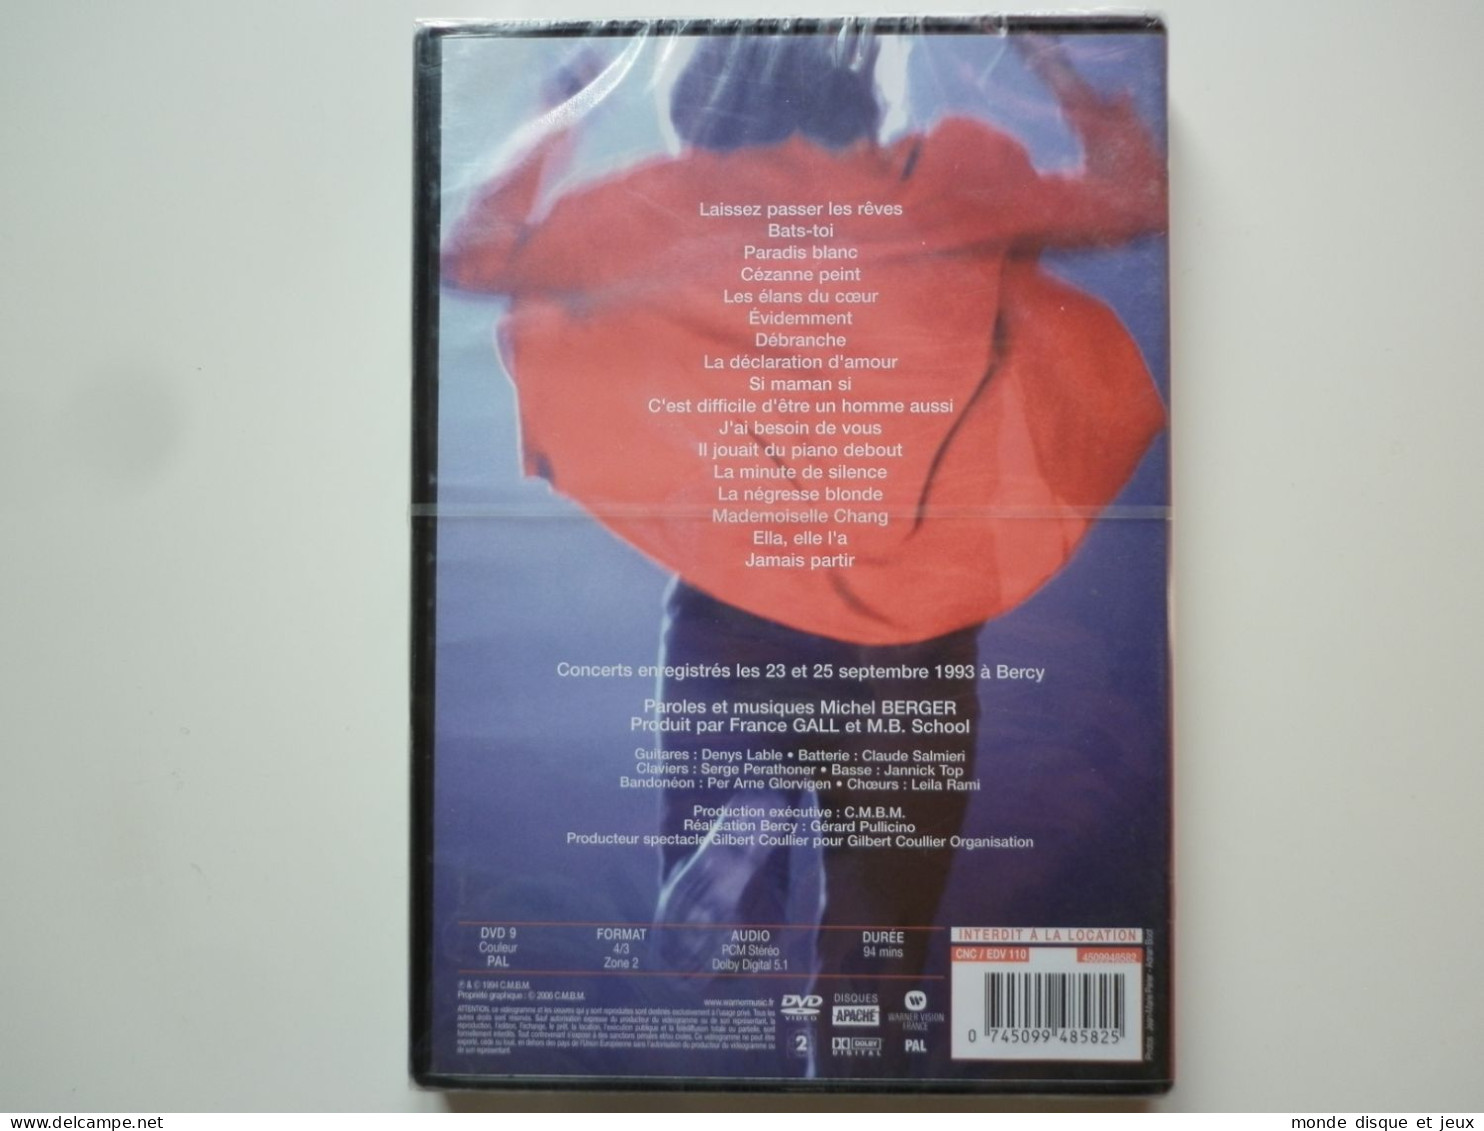 France Gall Dvd Bercy 93 - Musik-DVD's